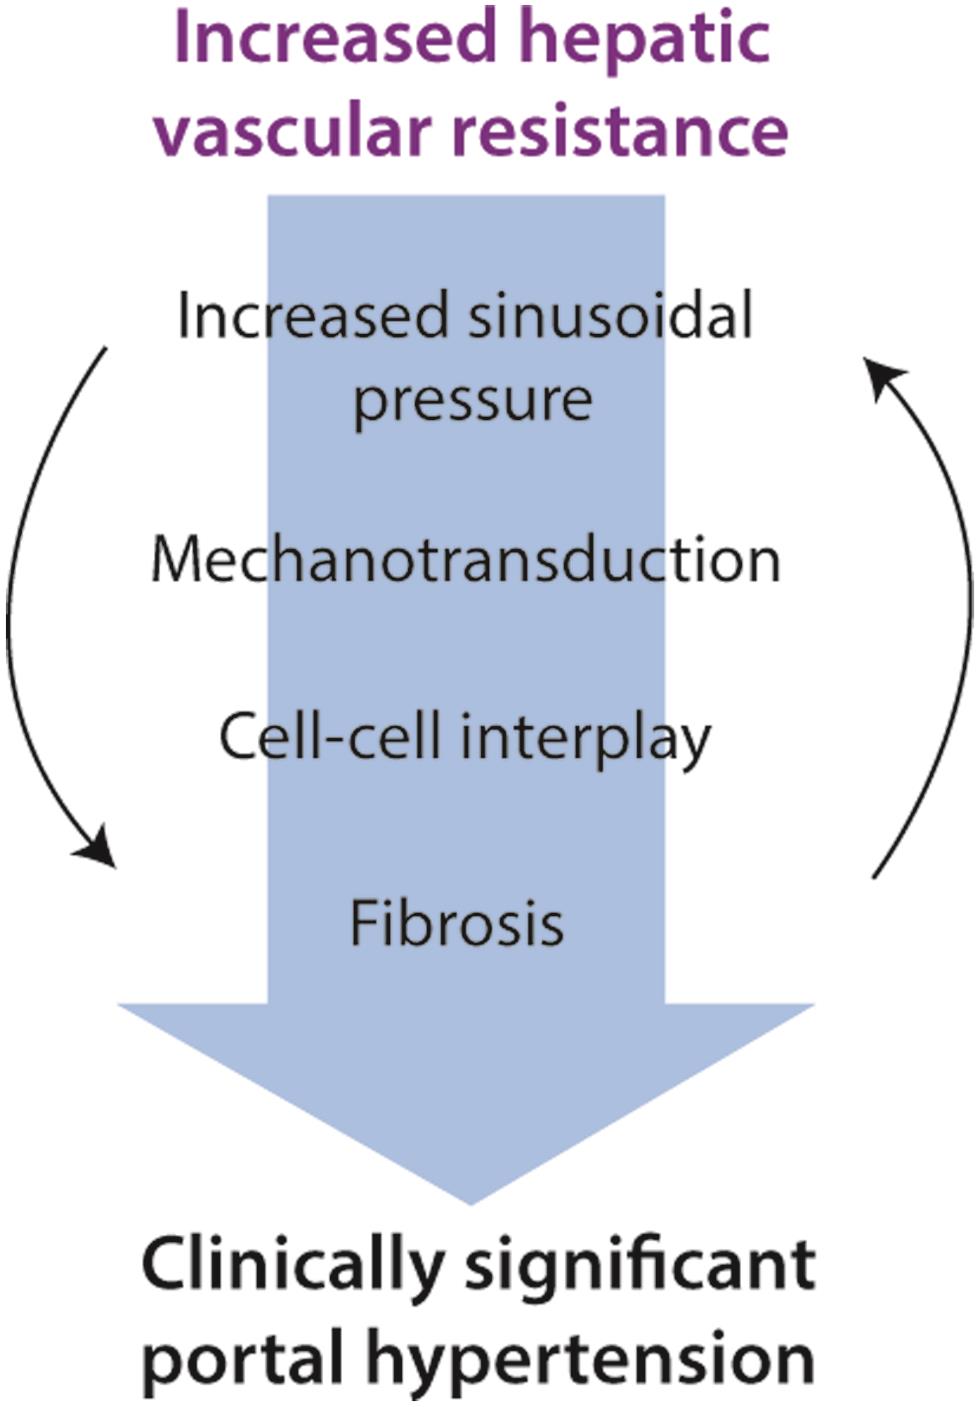 Sinusoidal pressure-liver fibrosis paradigm.